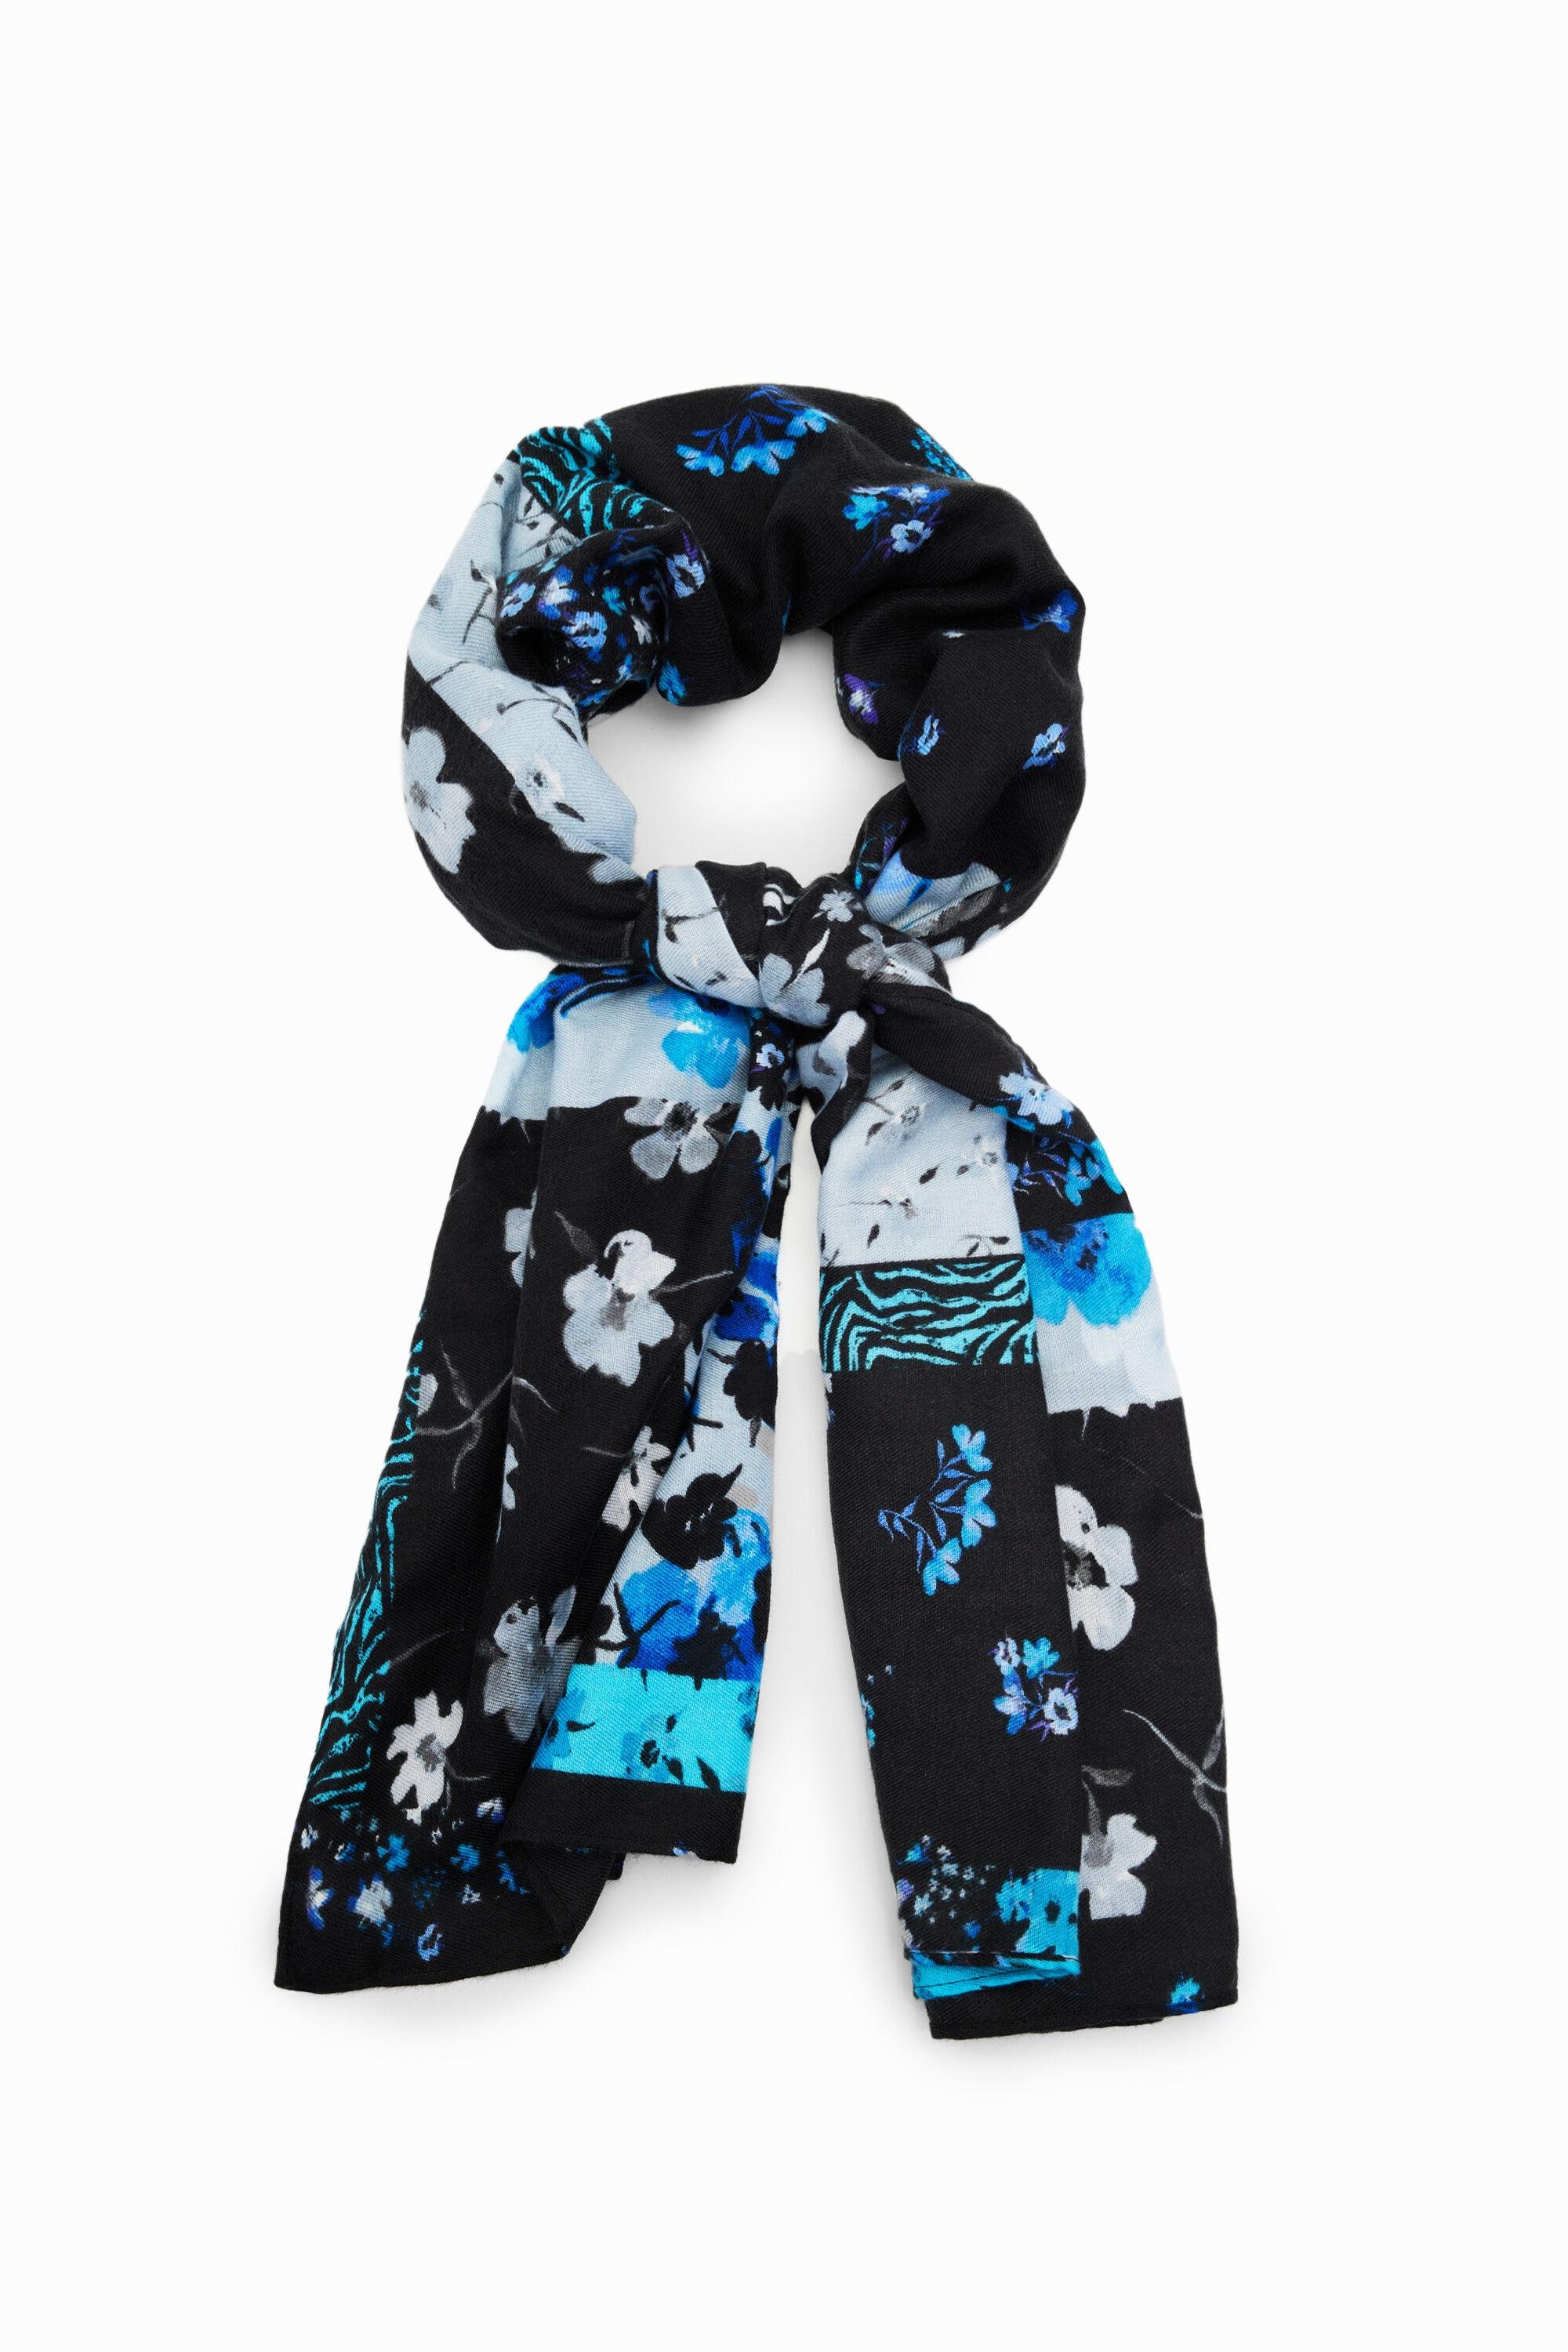 Rectangular patchwork floral foulard by DESIGUAL